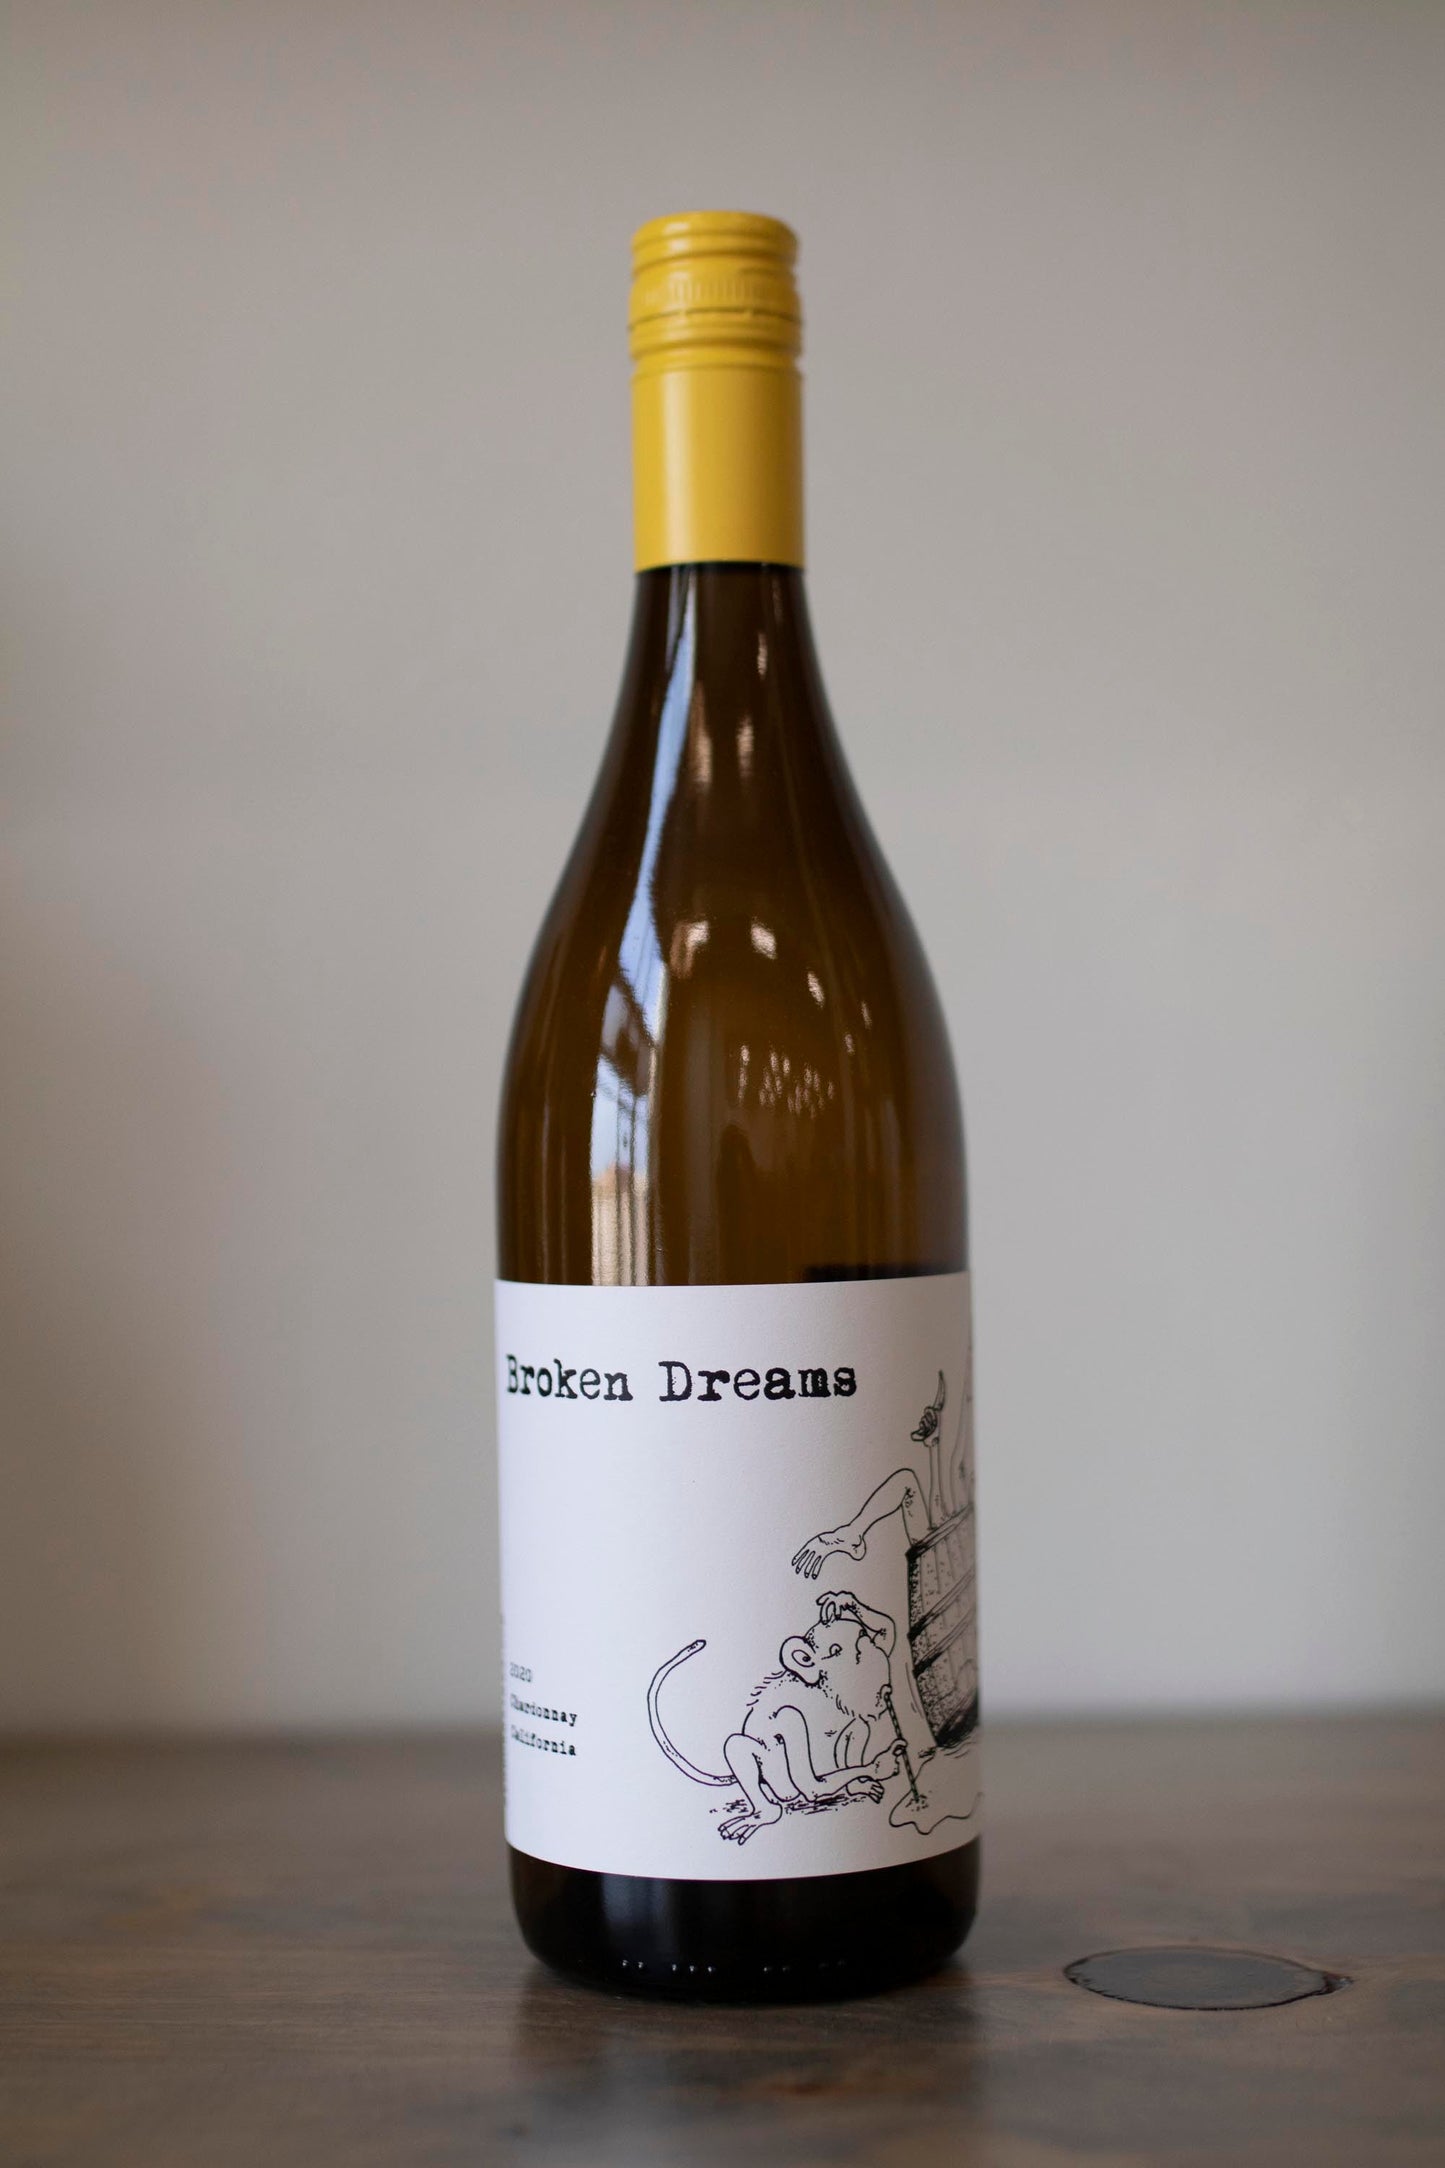 Bottle of Broken Dreams Chardonnay found at Vine & Board in 3809 NW 166th St Suite 1, Edmond, OK 73012